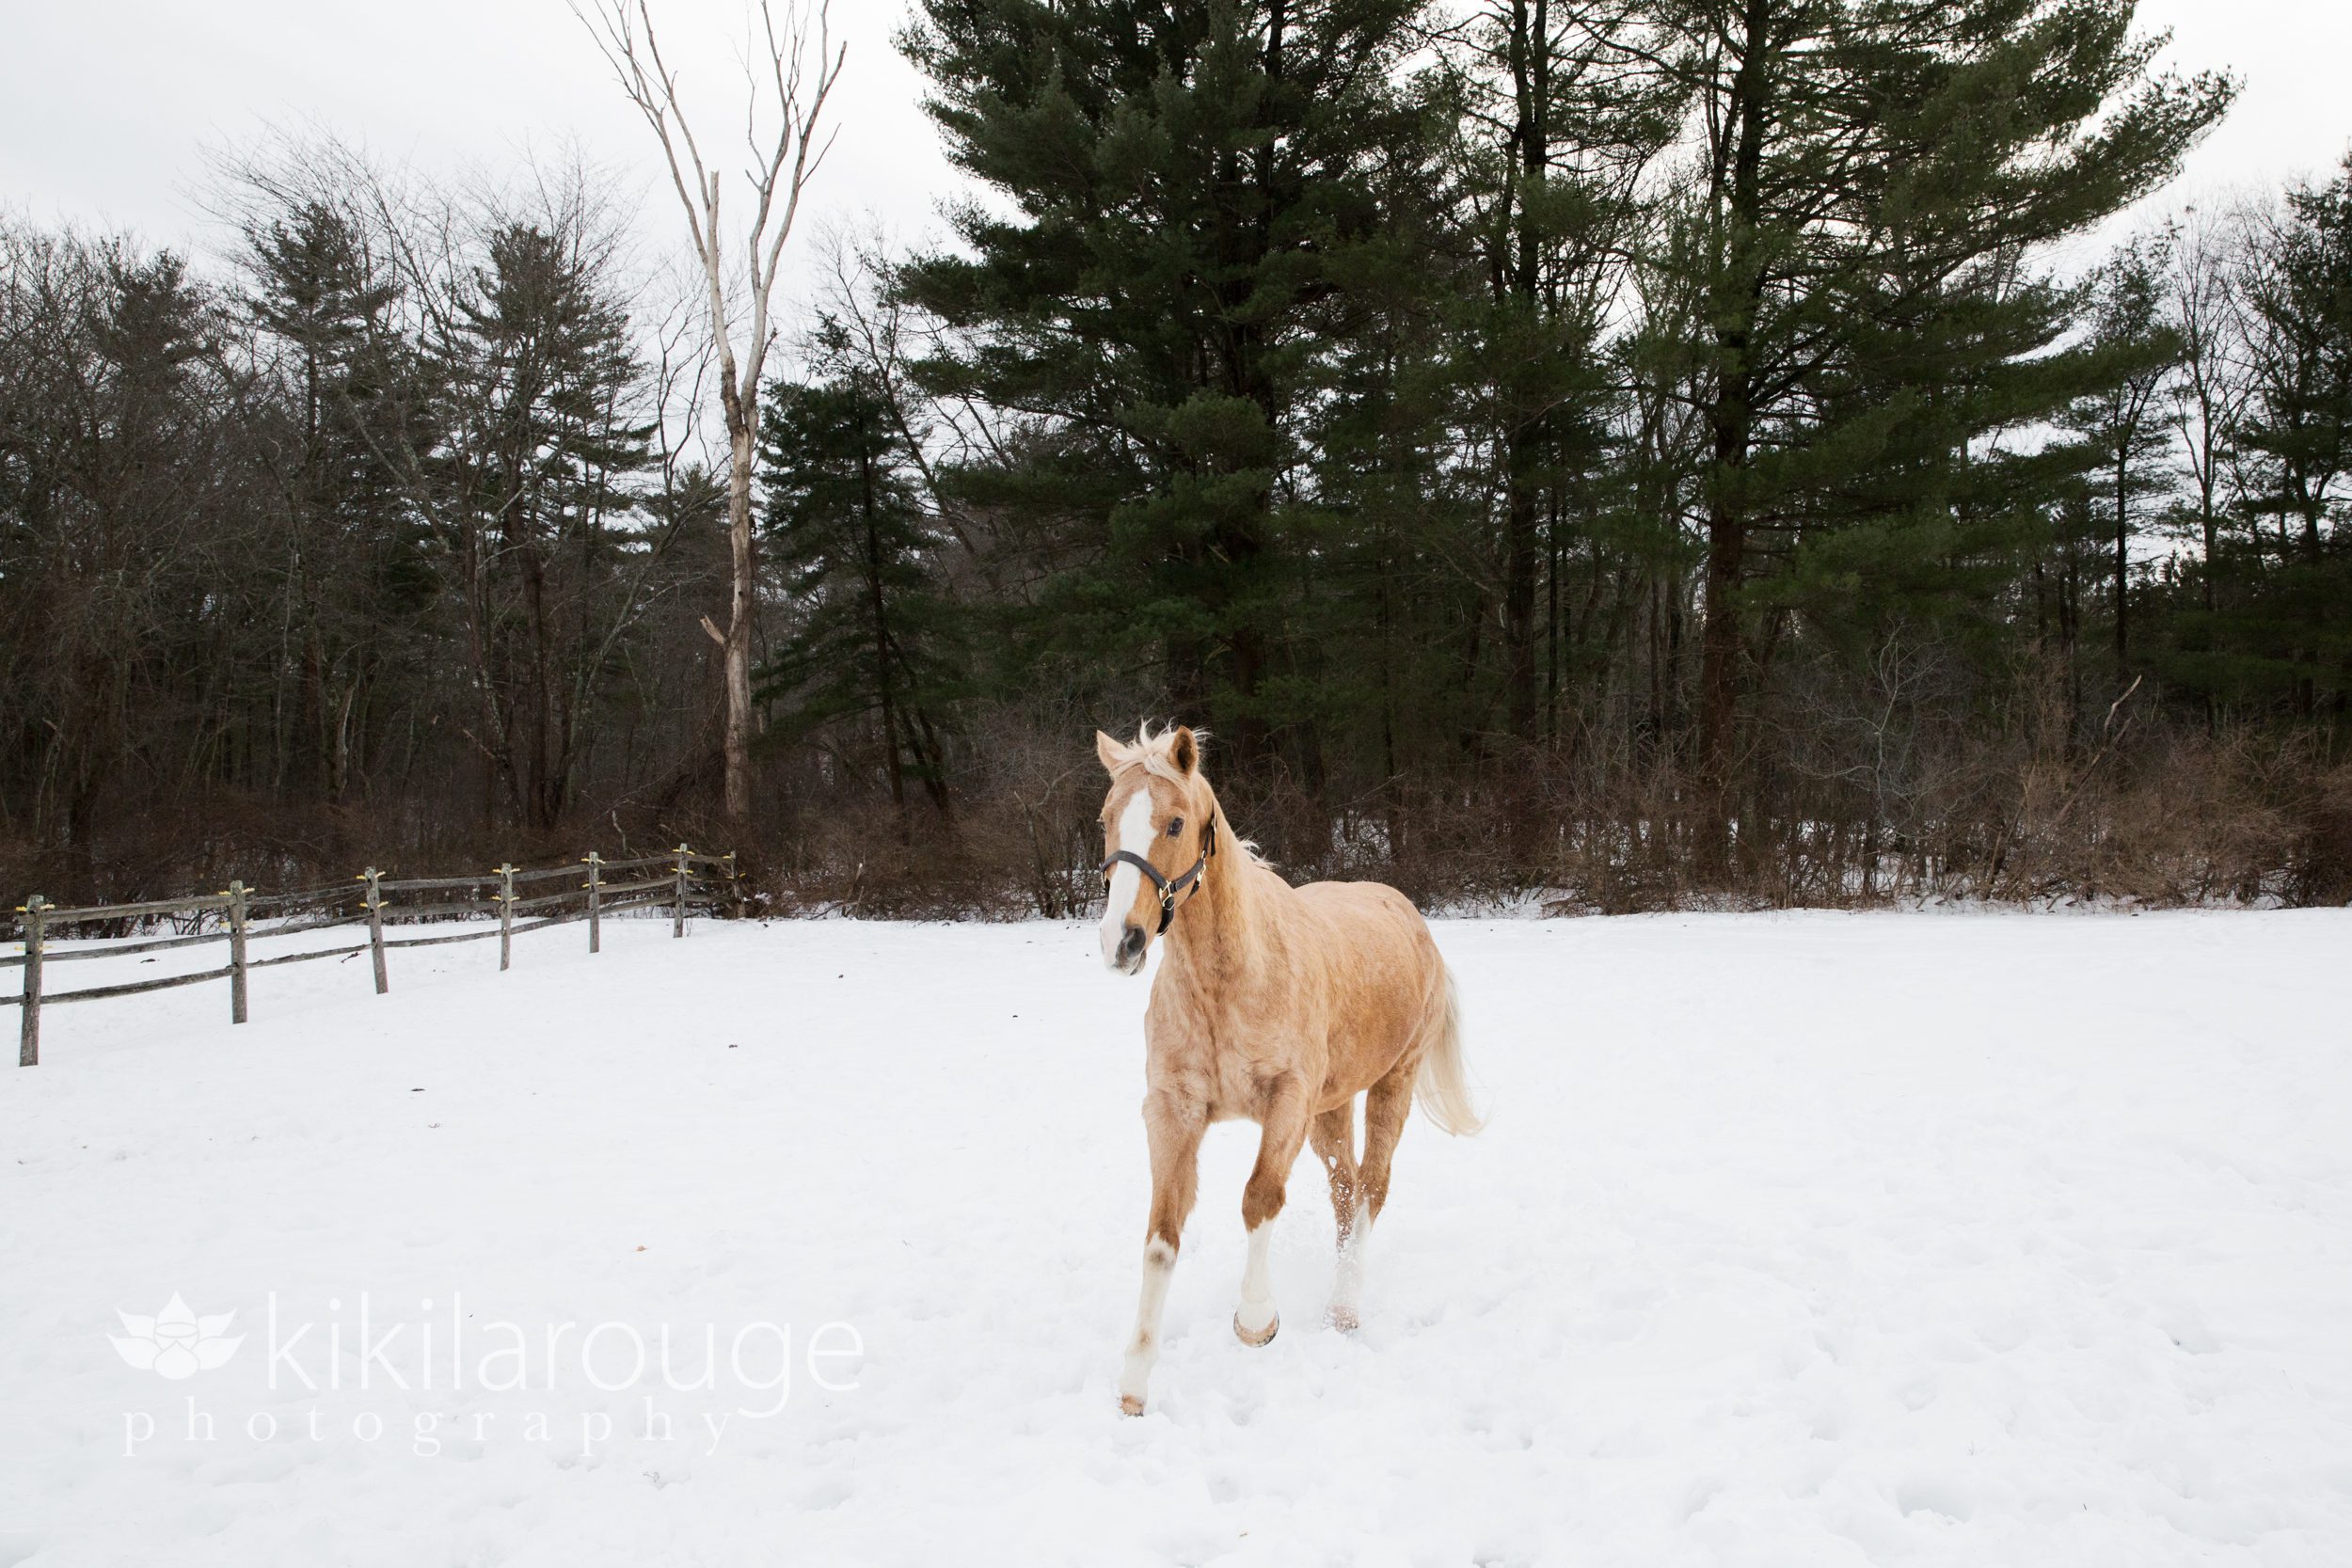 Tawny horse running in snowy paddock